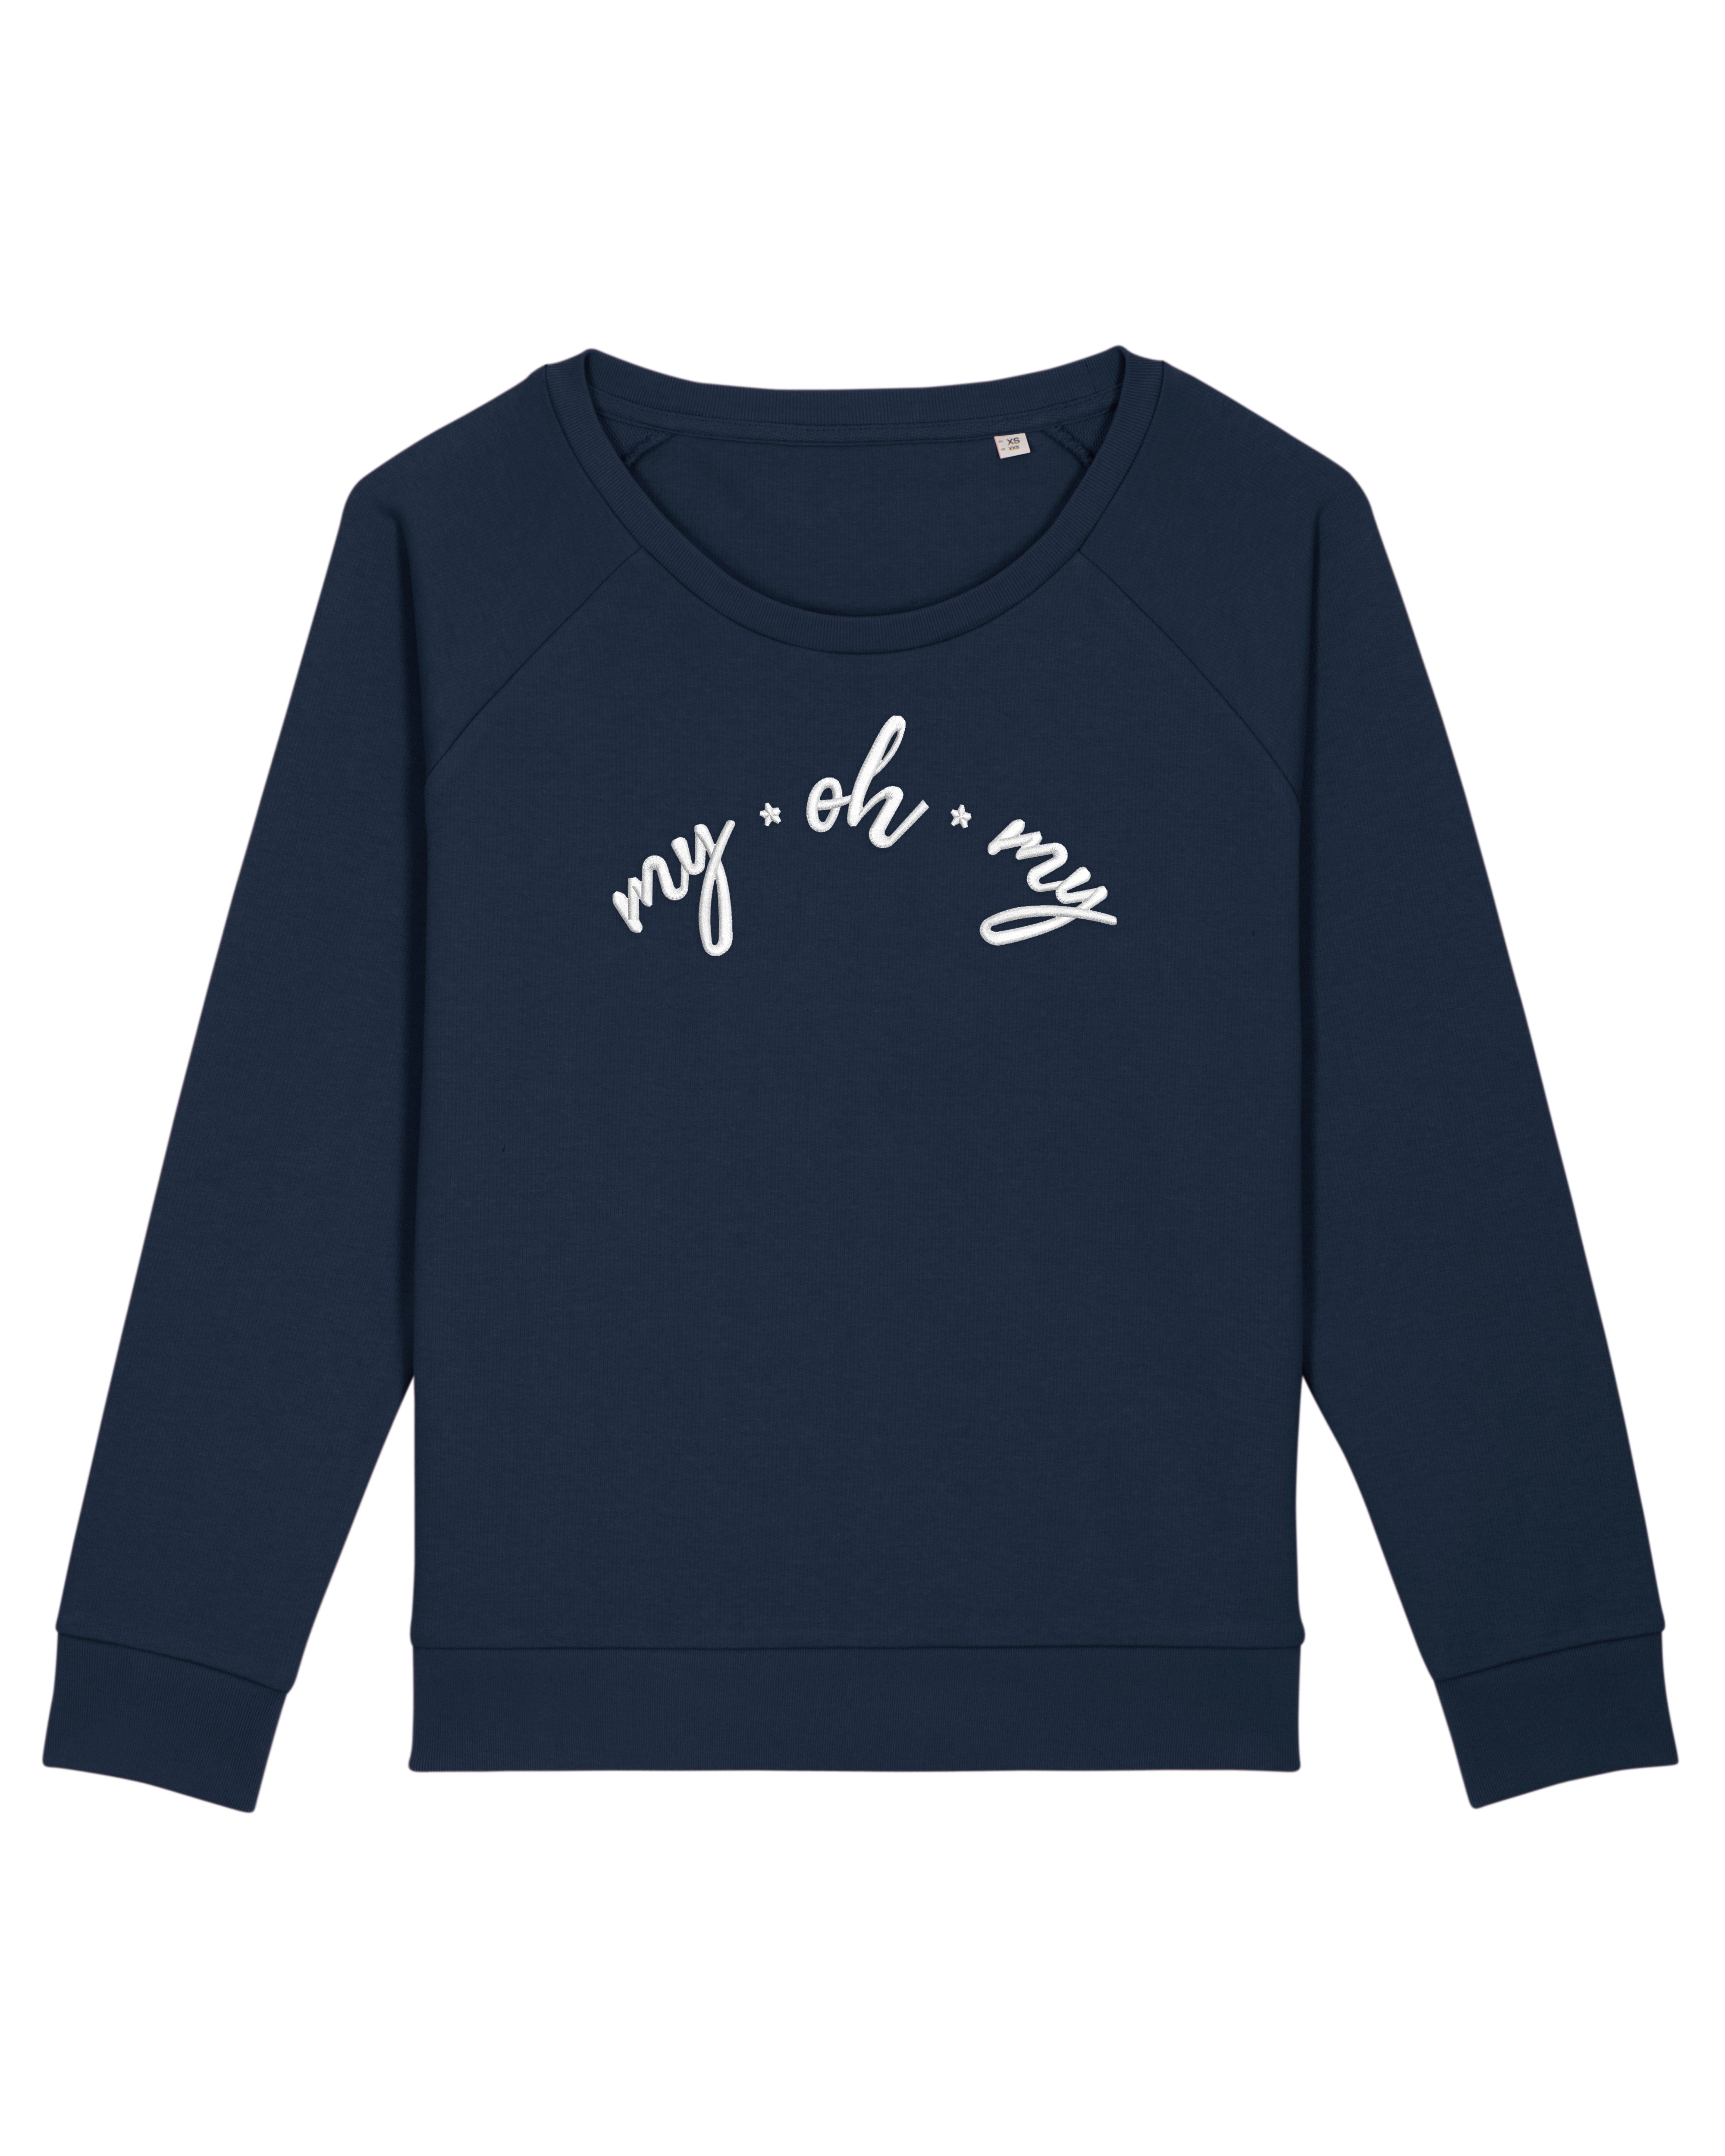 Navy My Oh My Sweatshirt - MADE TO ORDER JK